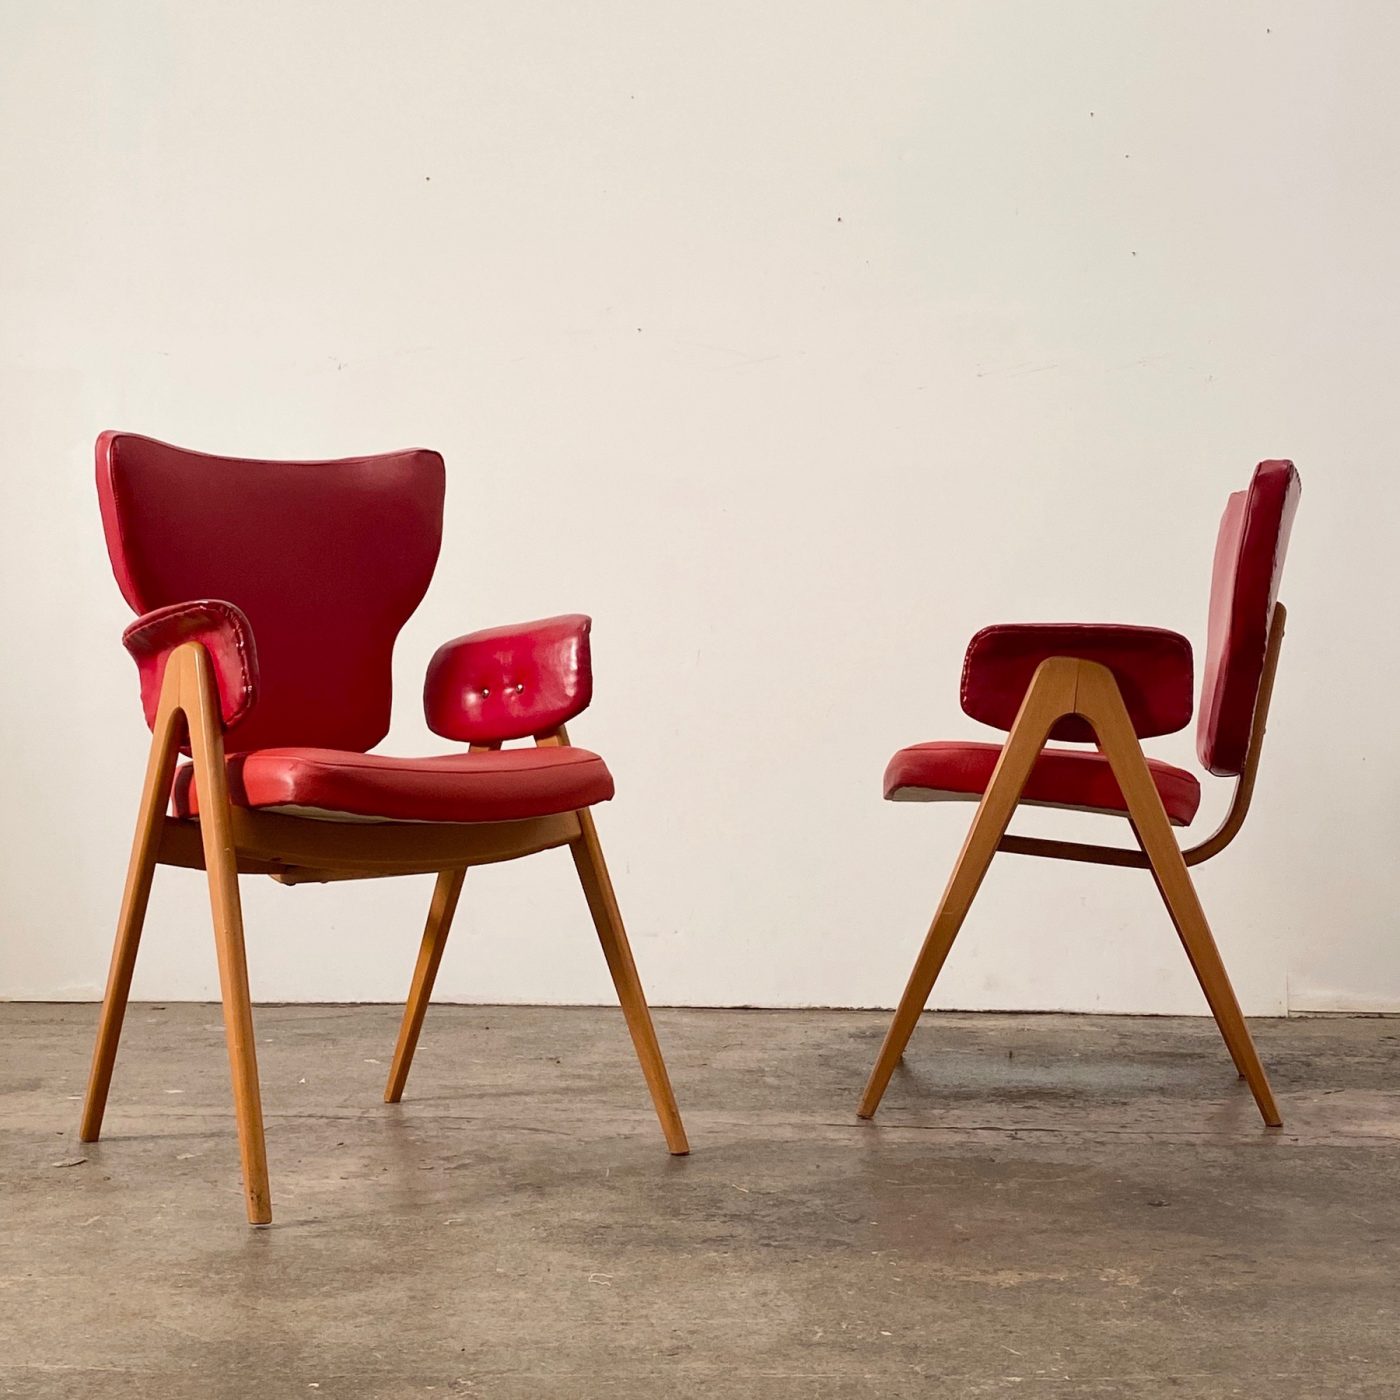 objet-vagabond-vintage-chairs0002